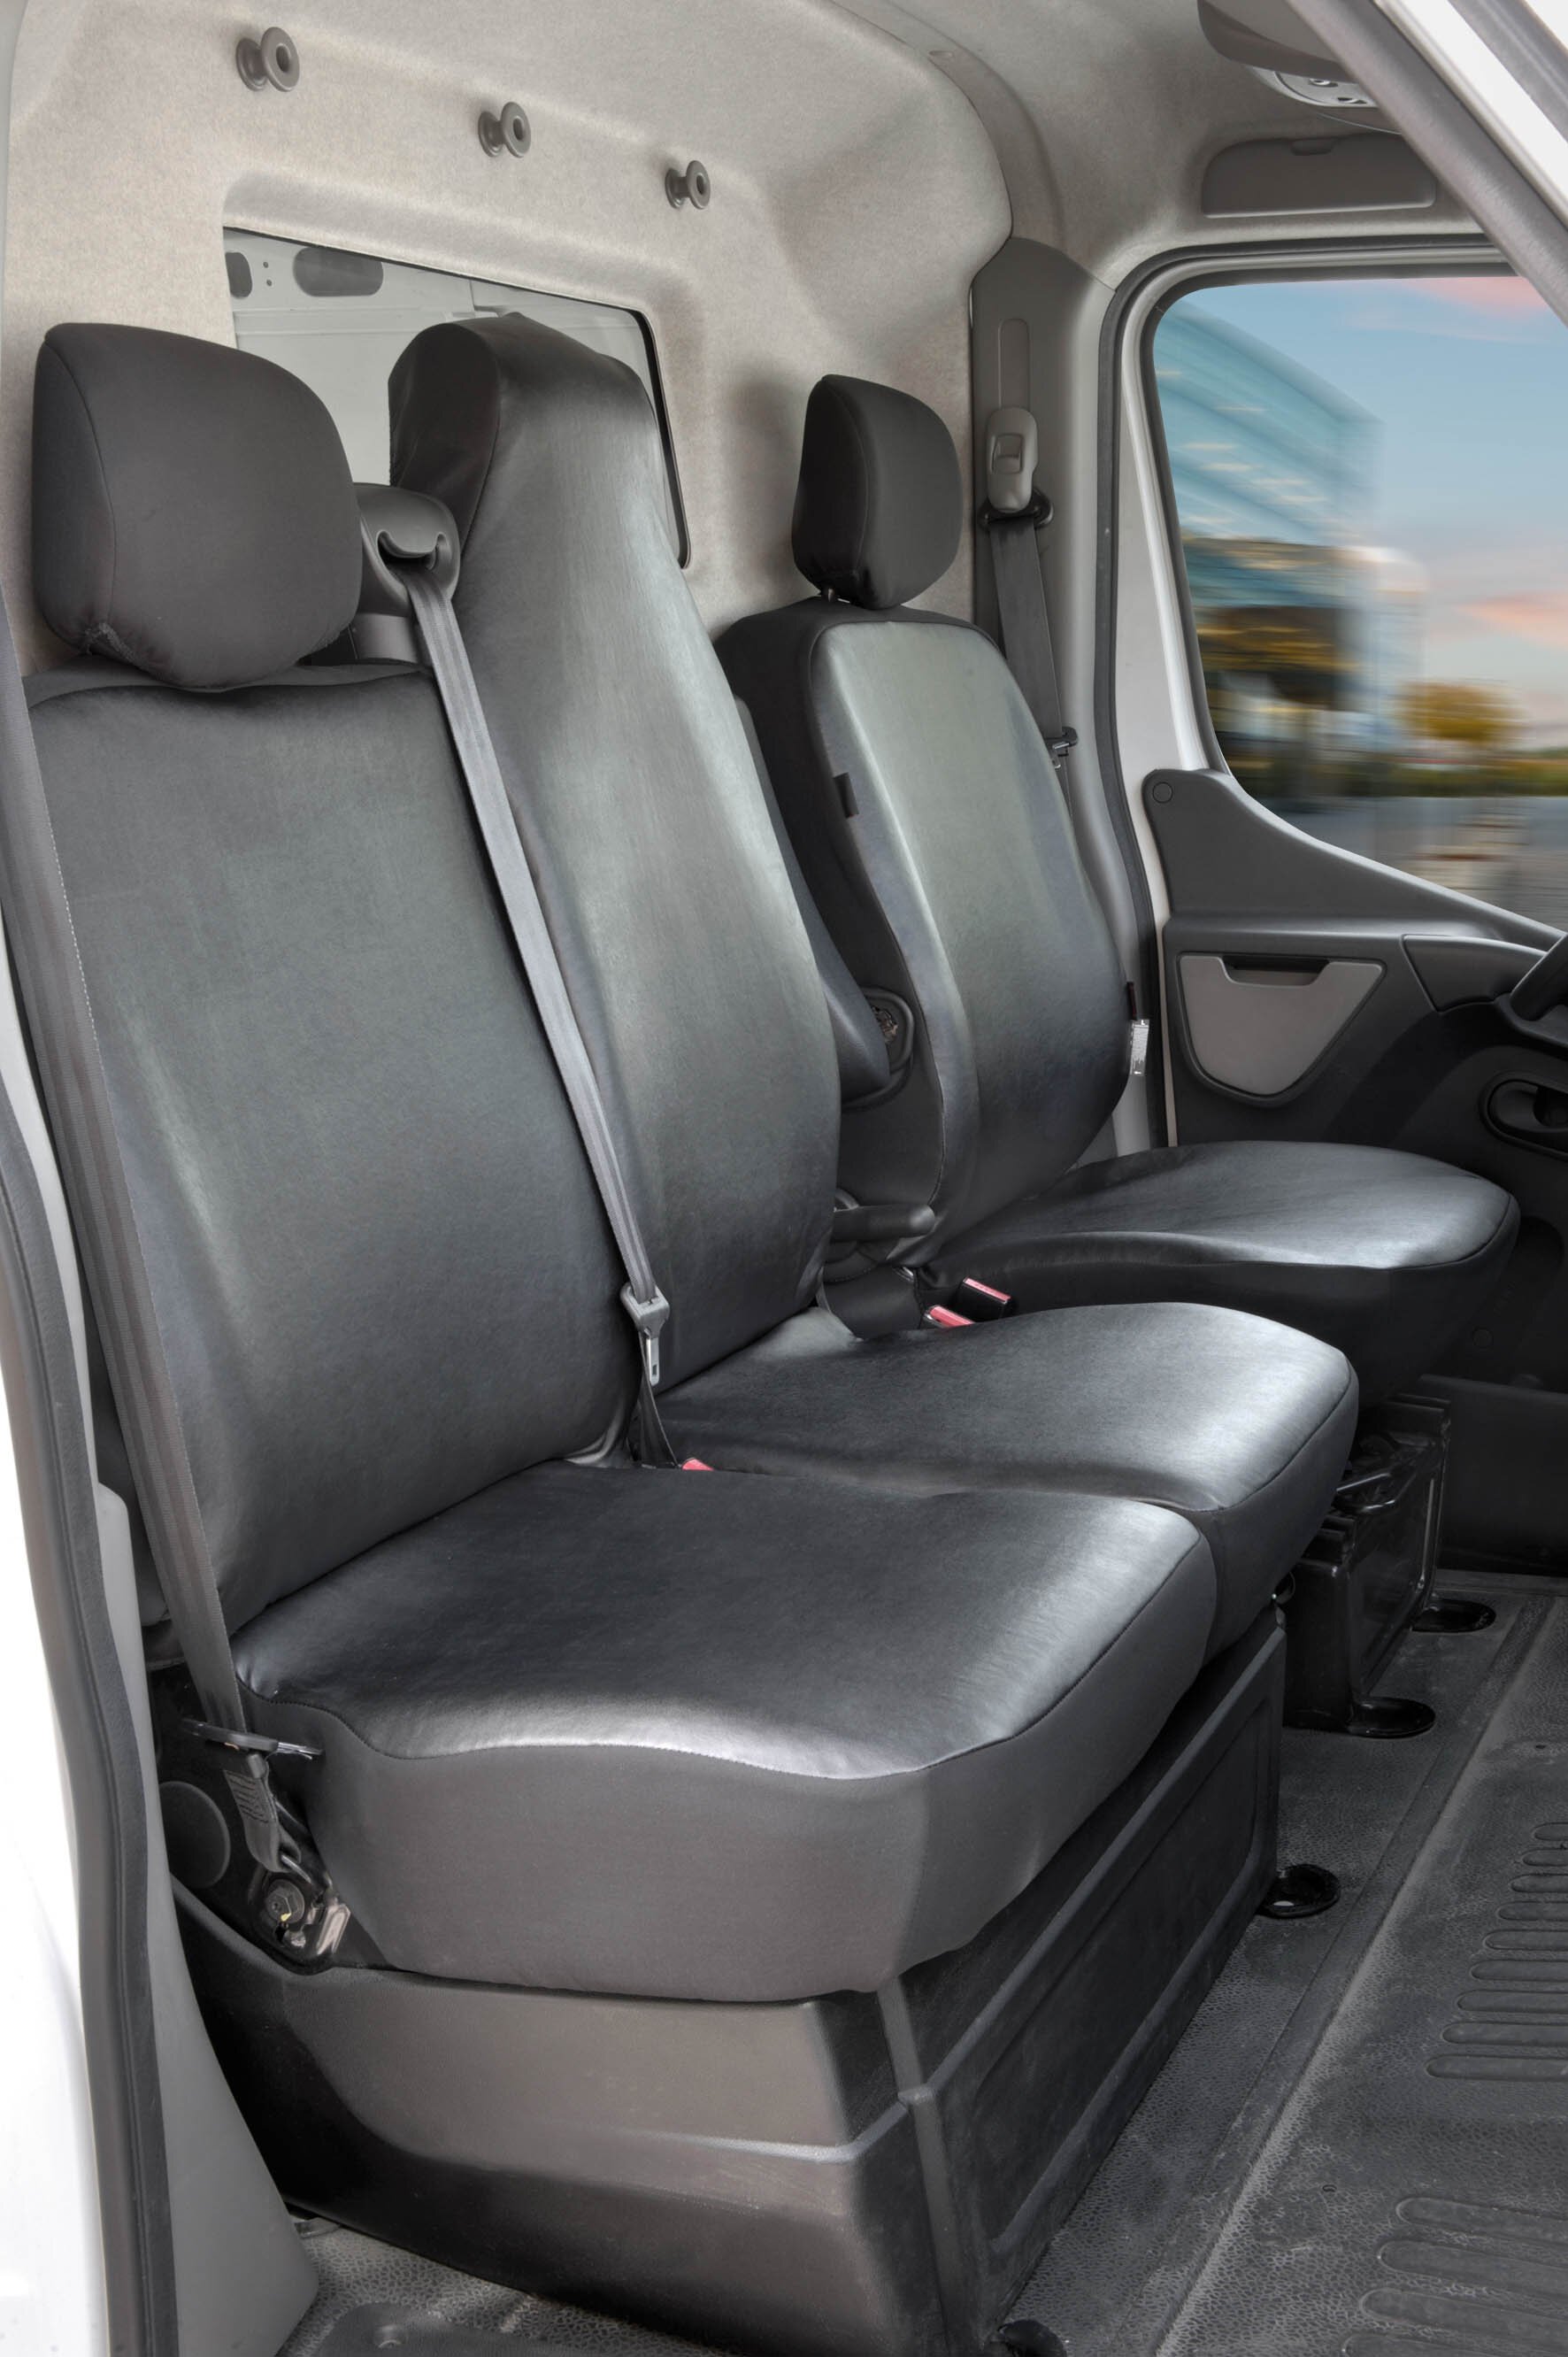 Housse de siège Transporter en simili cuir pour Opel Movano, Renault Master, Nissan Interstar, siège simple & double